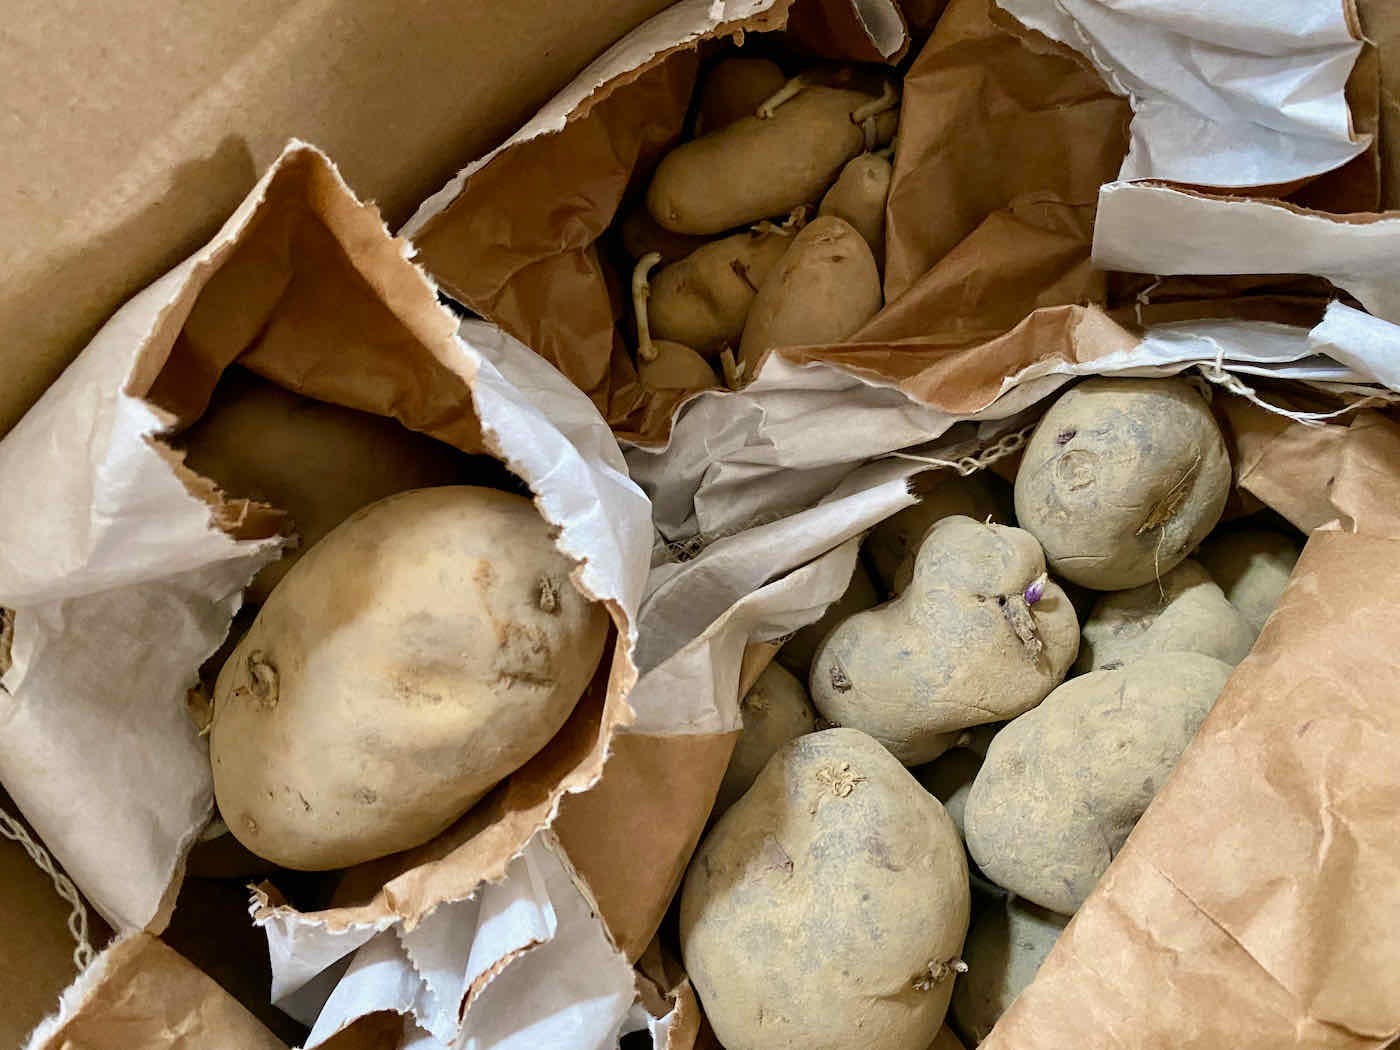 A box full of seed potatoes